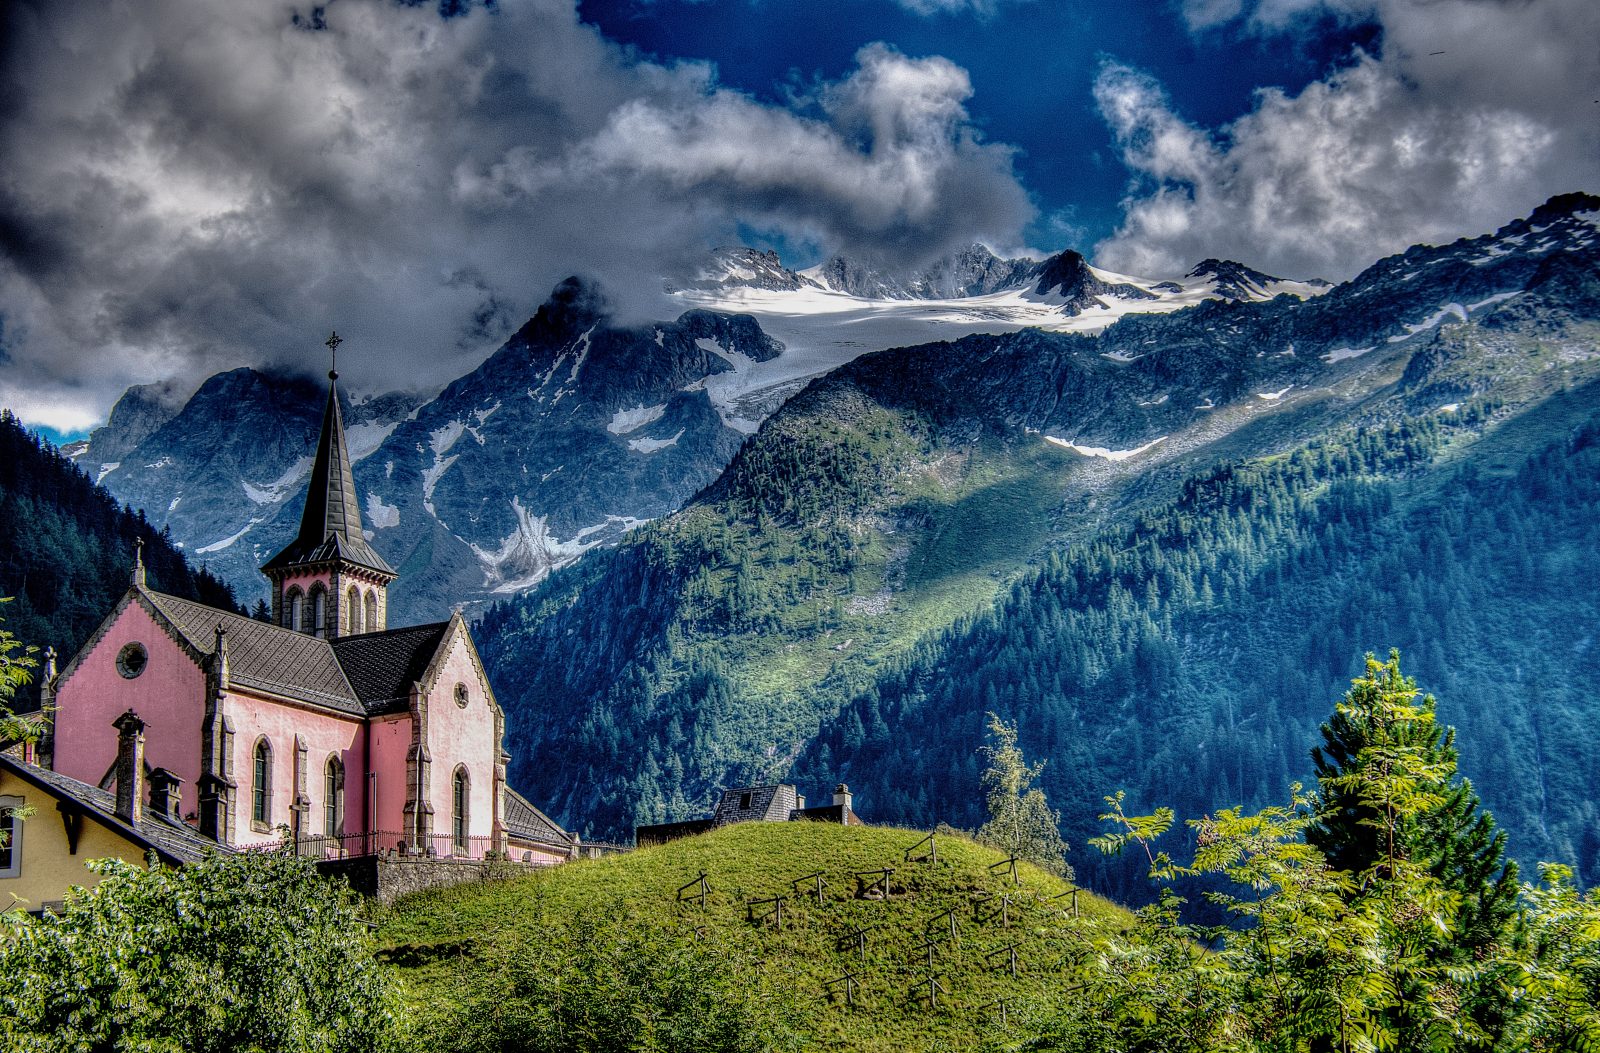 Scenic image of Switzerland mountains